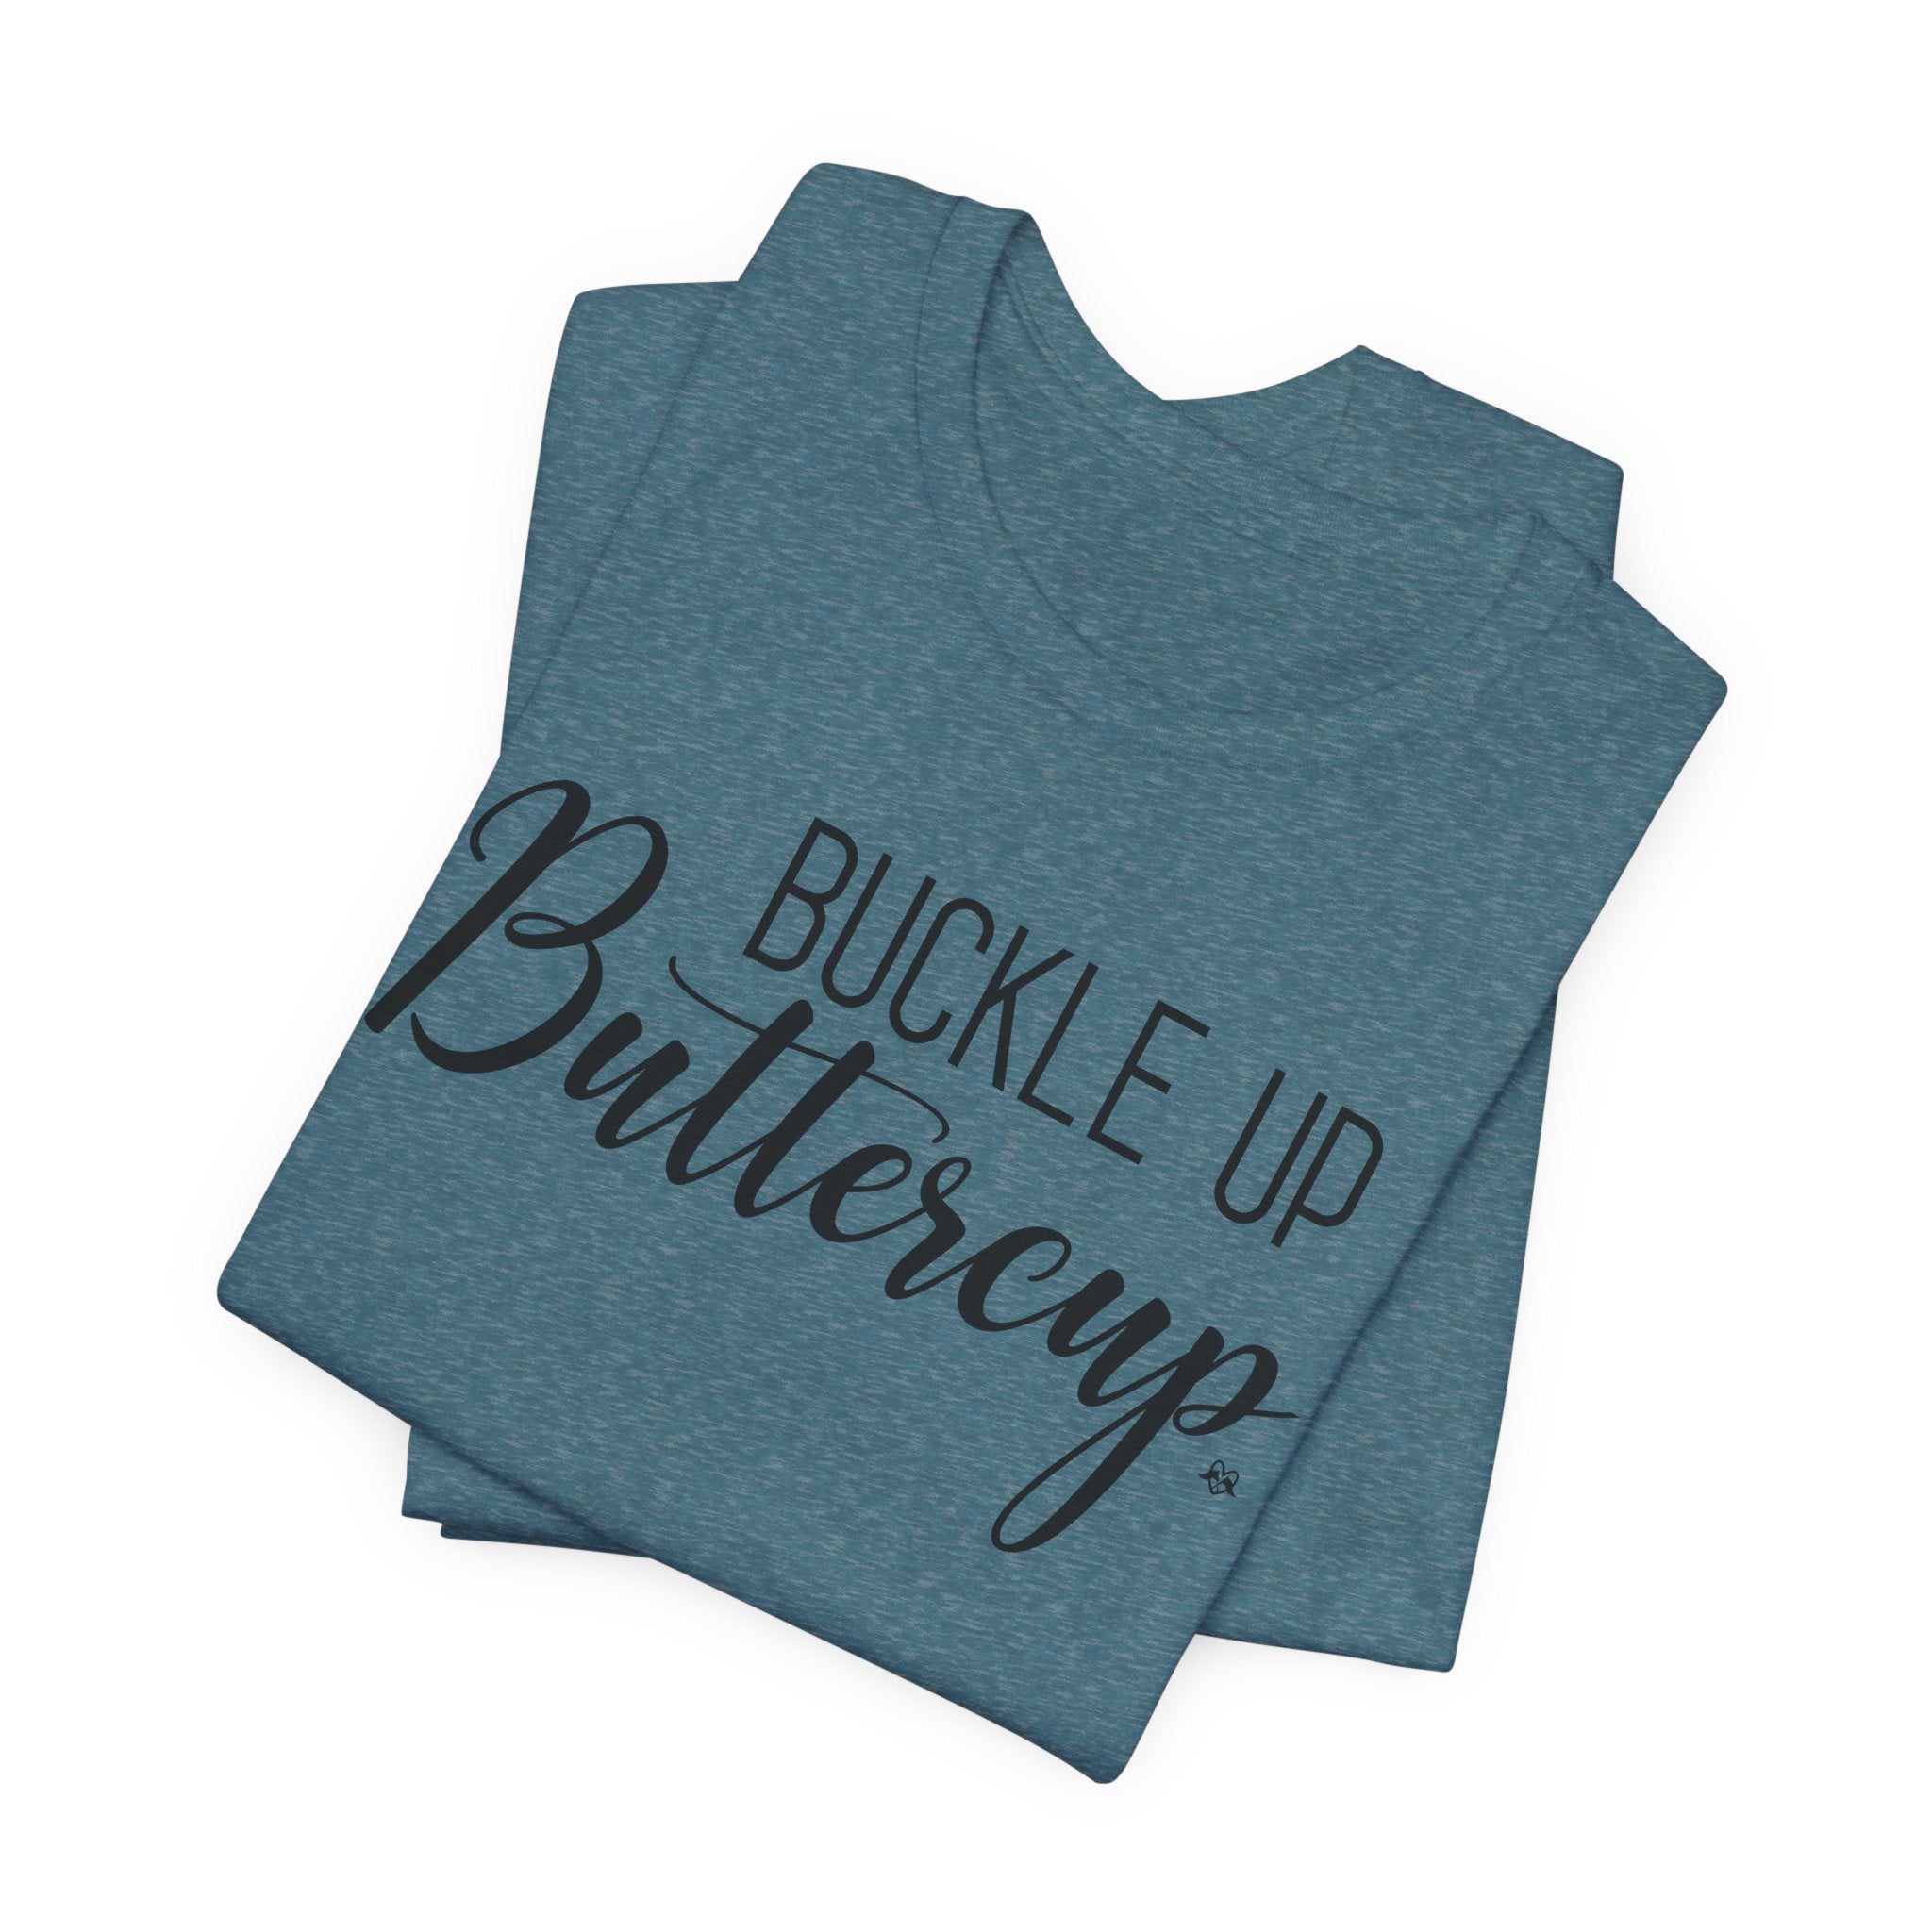 Buckle Up Buttercup Unisex Raceday T-Shirt for Race Women